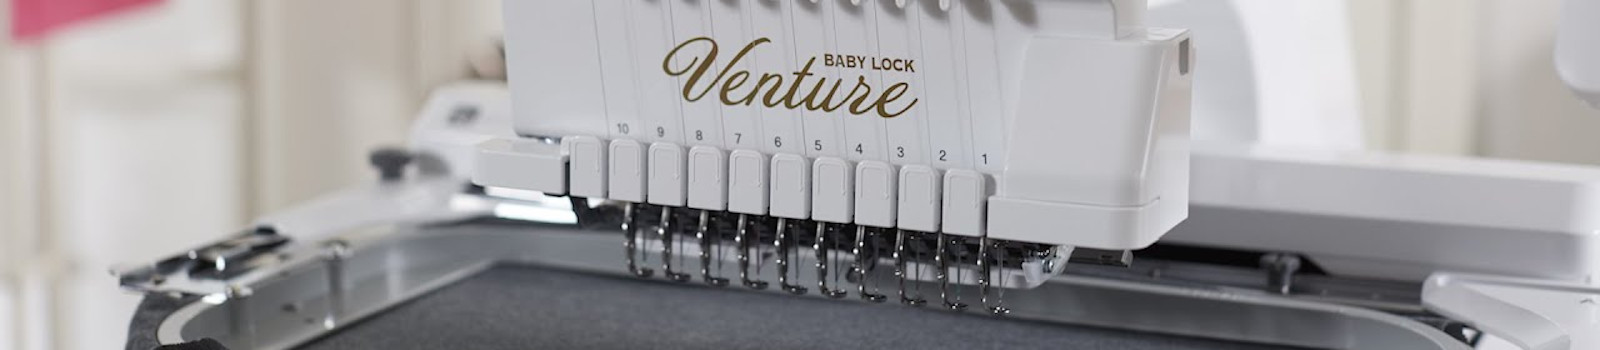 Baby Lock Venture Multi Needle Embroidery Machine